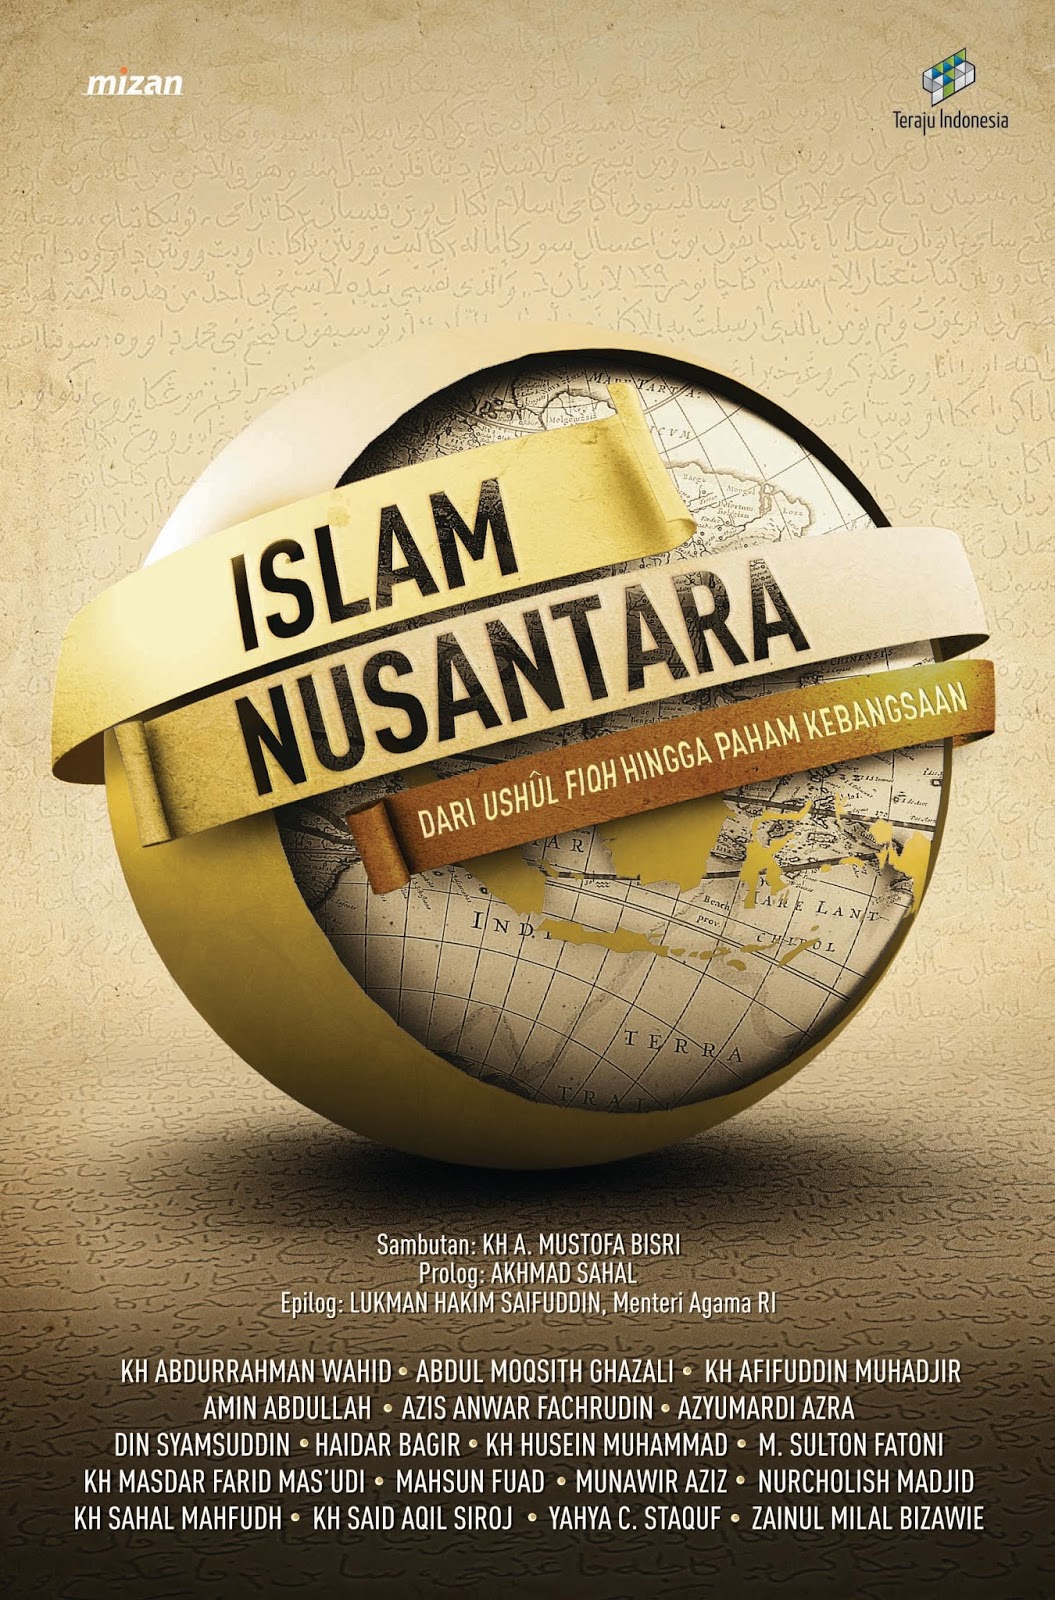 Genealogi Pengetahuan Islam Nusantara Persma Institut Uin Jakarta